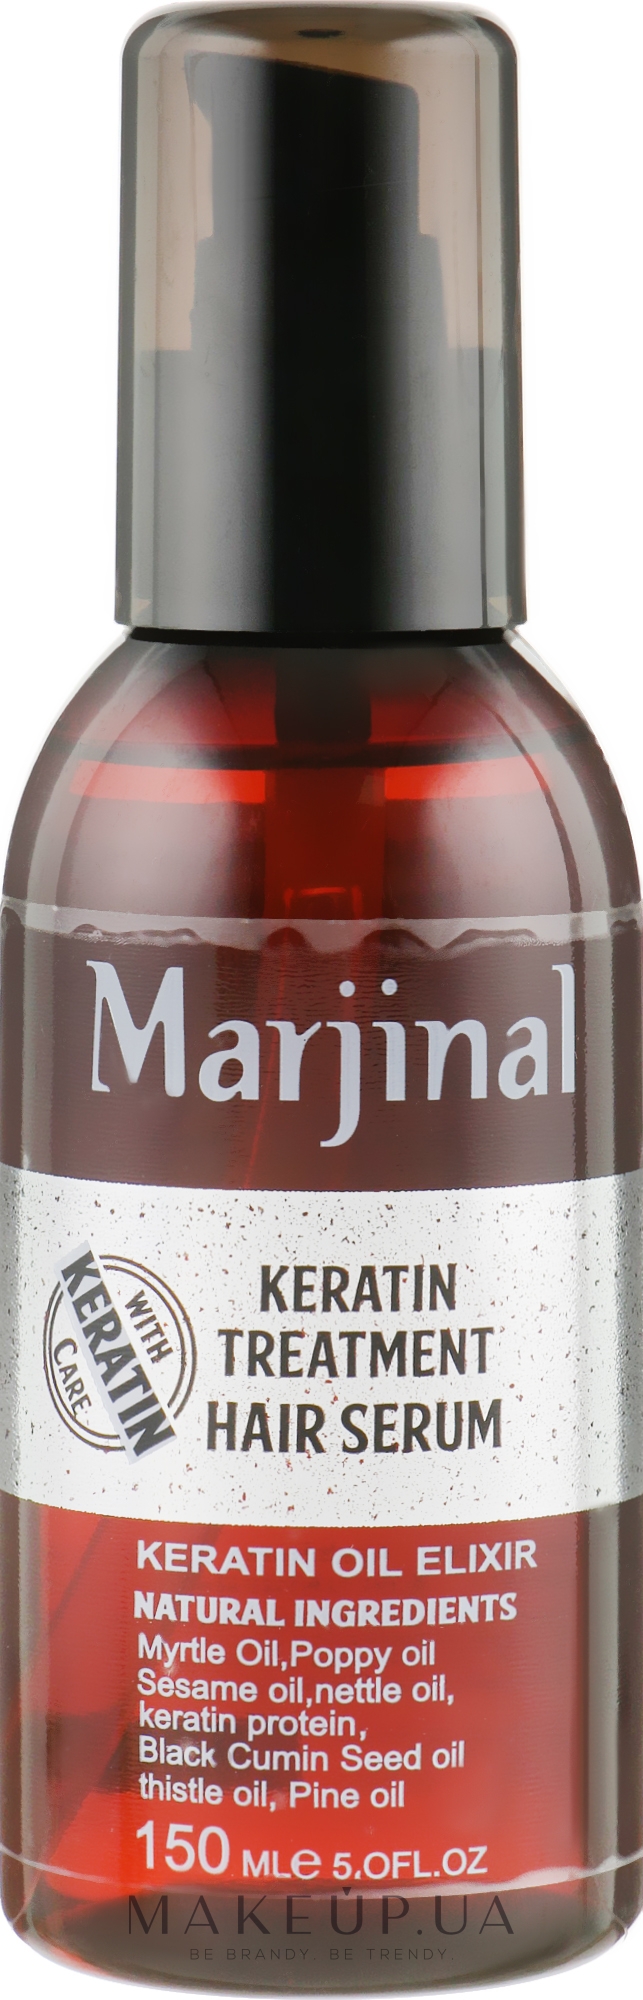 Сыворотка для волос с кератином - Marjinal Keratin Treatment Hair Serum  — фото 150ml